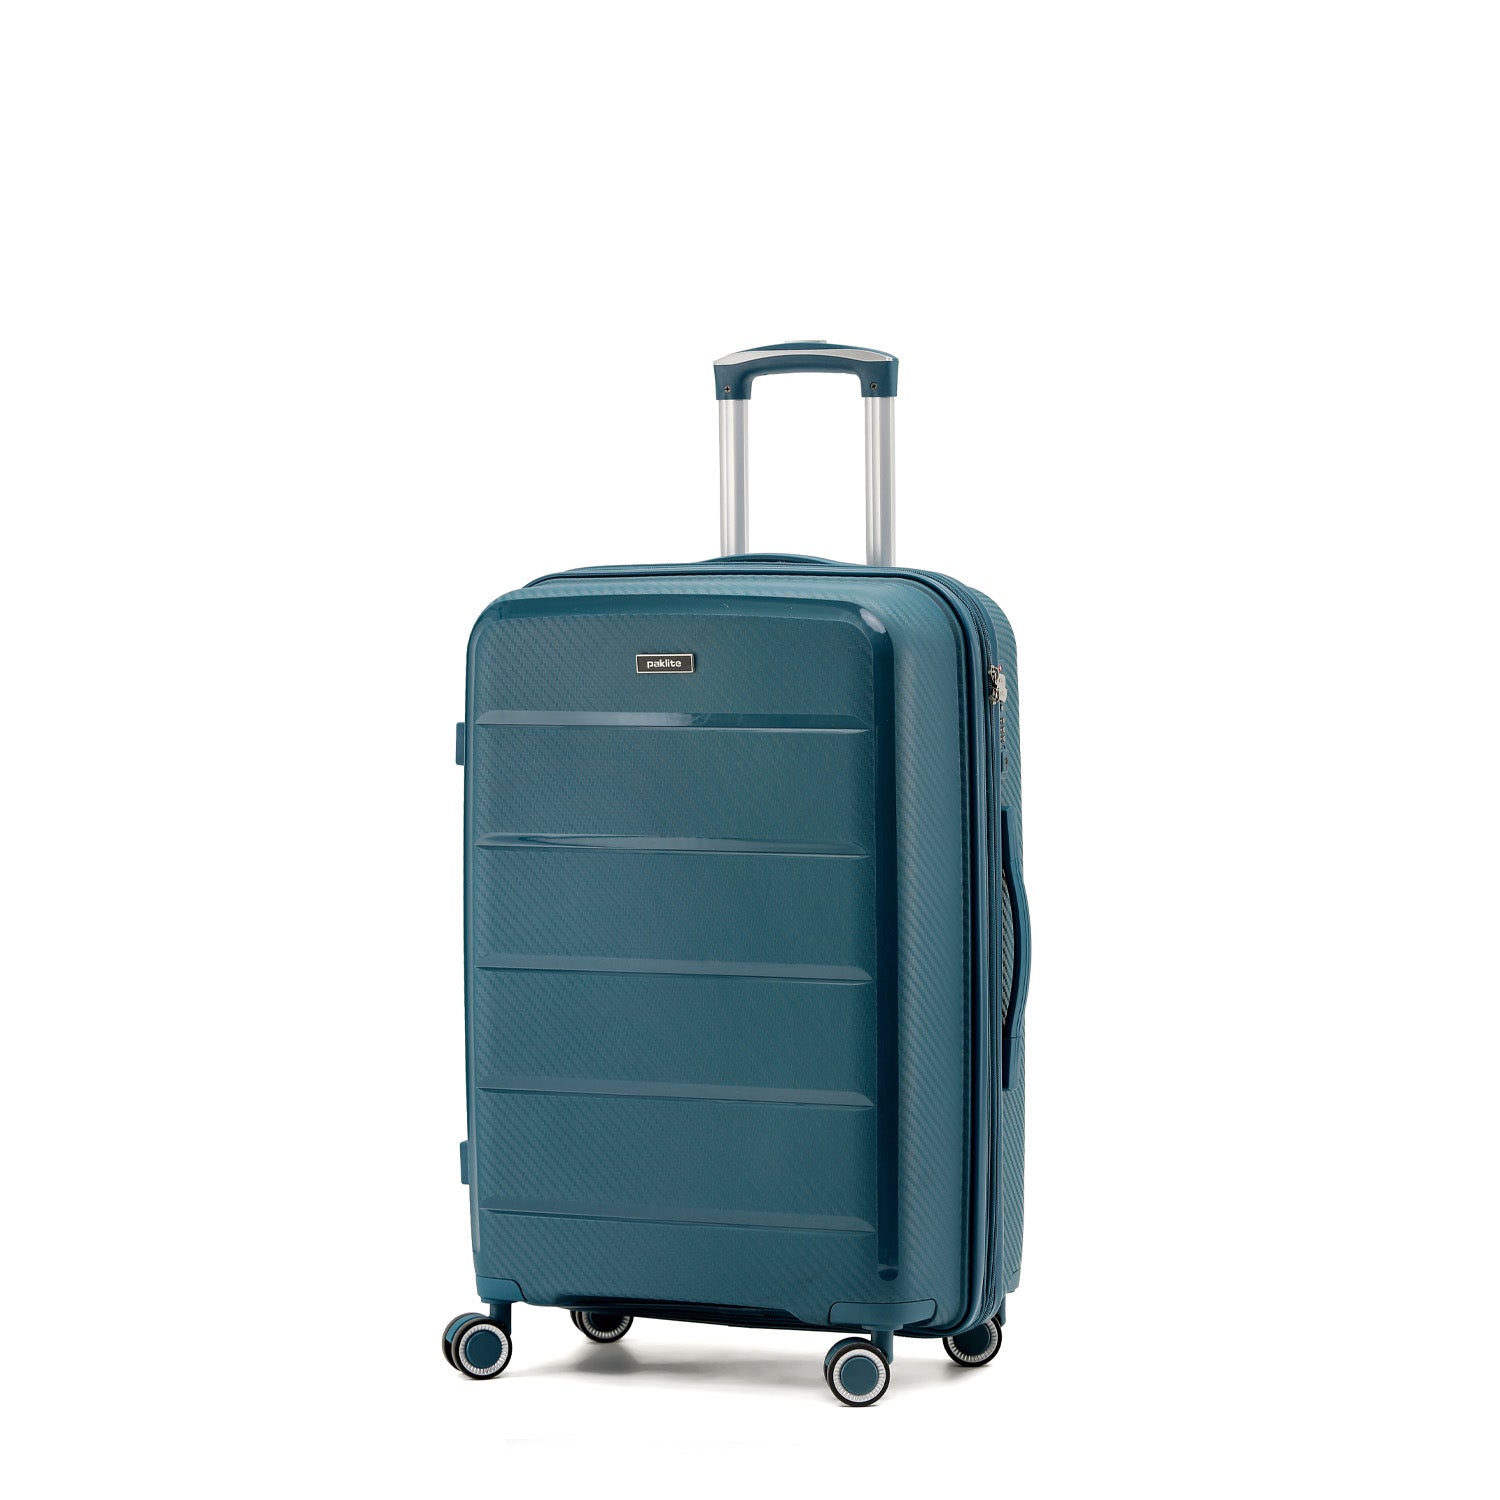 Paklite - PA7350 Set of 3 Suitcases - Blue-15